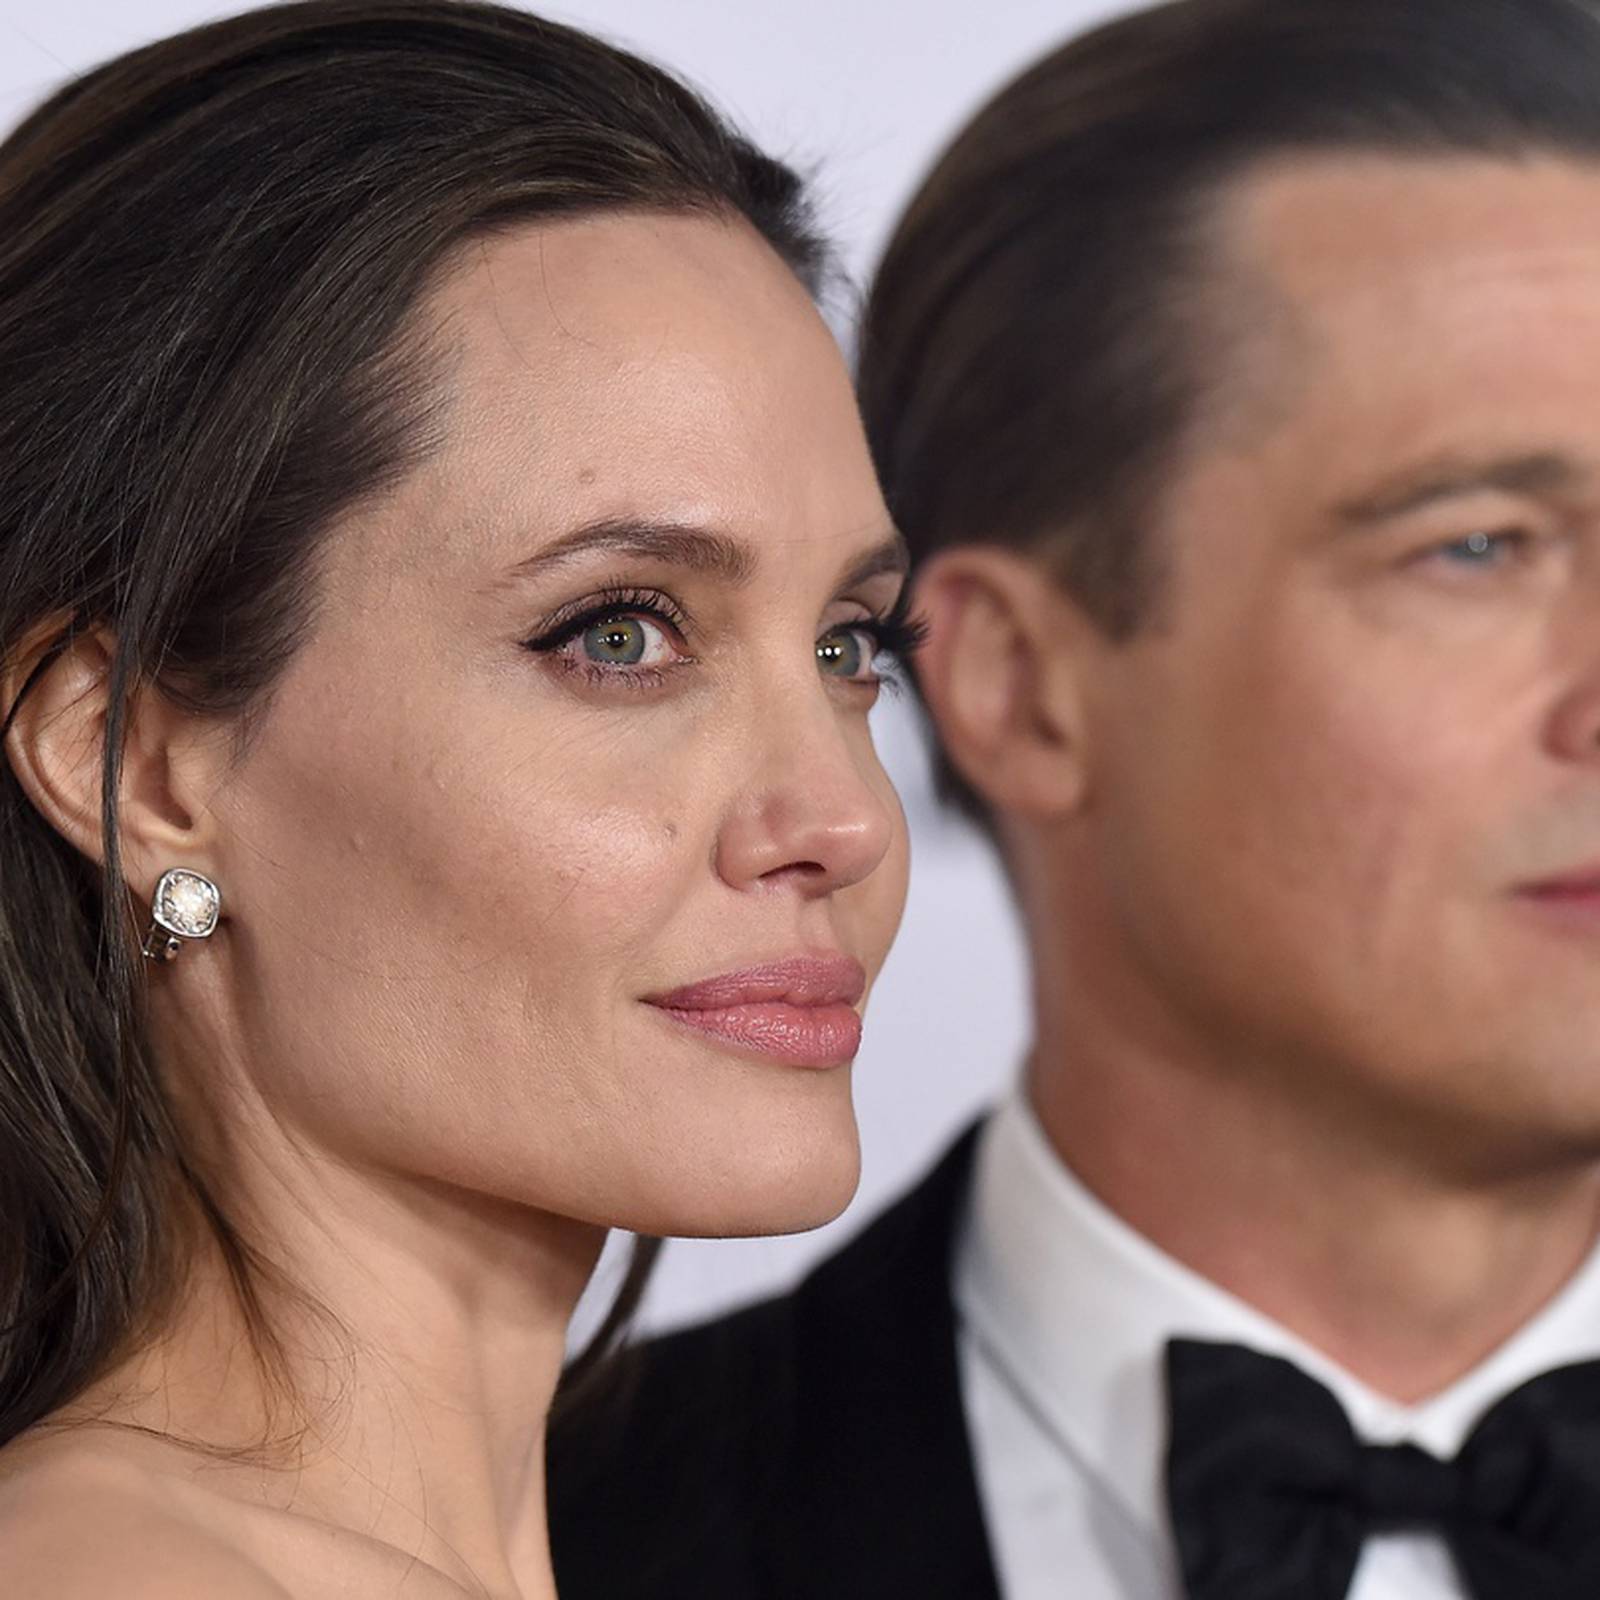 Brad Pitt sues Angelina Jolie over sale of winery stake